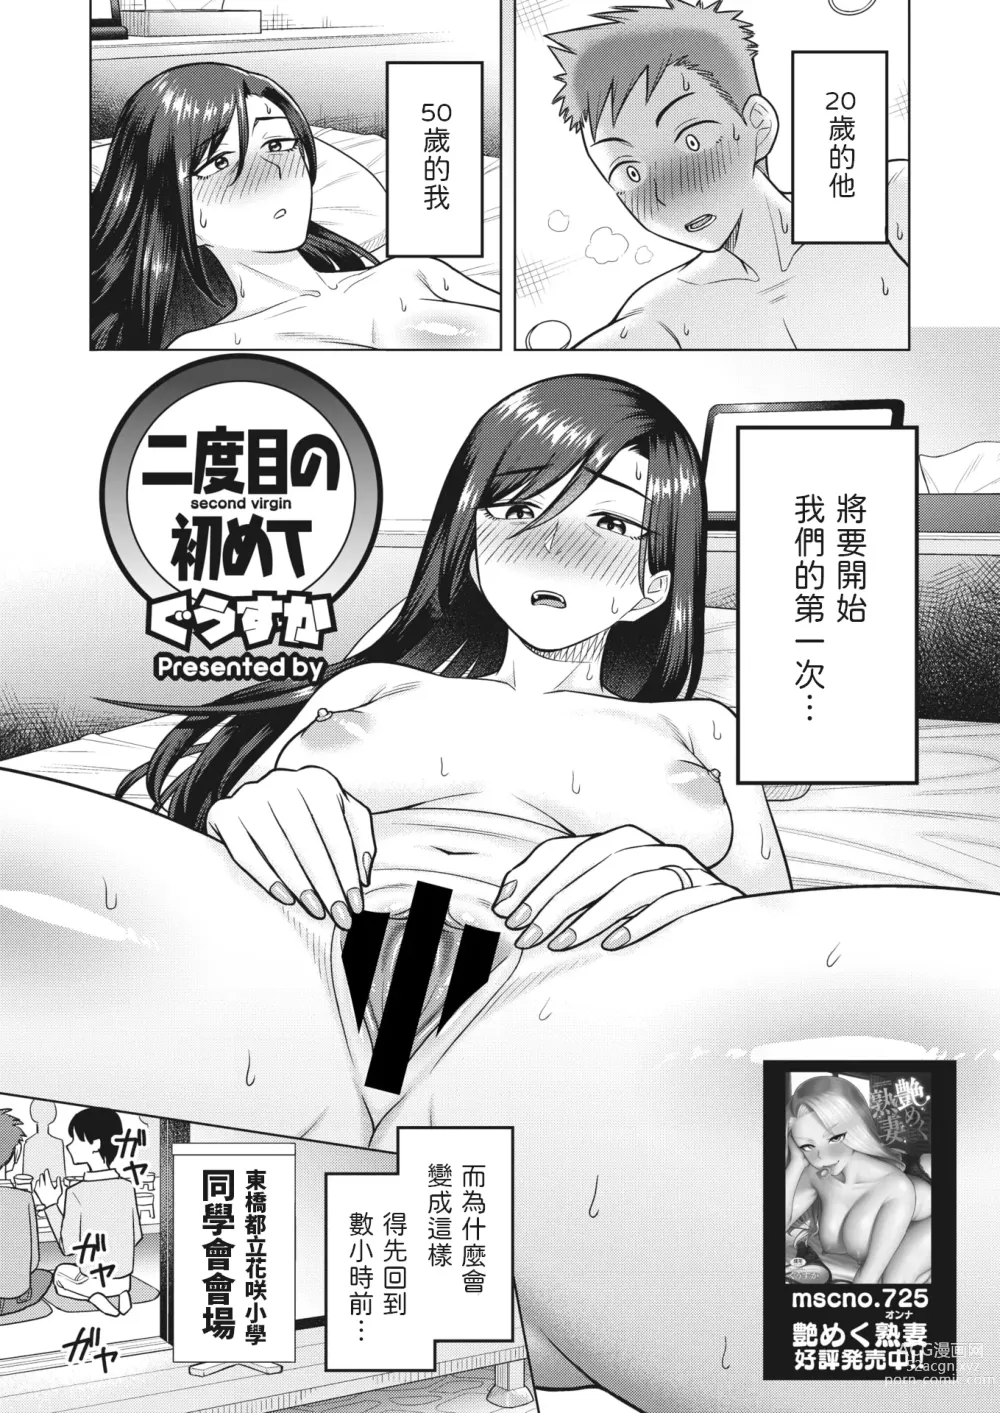 Page 1 of manga Nidome no Hajimete - second virgin